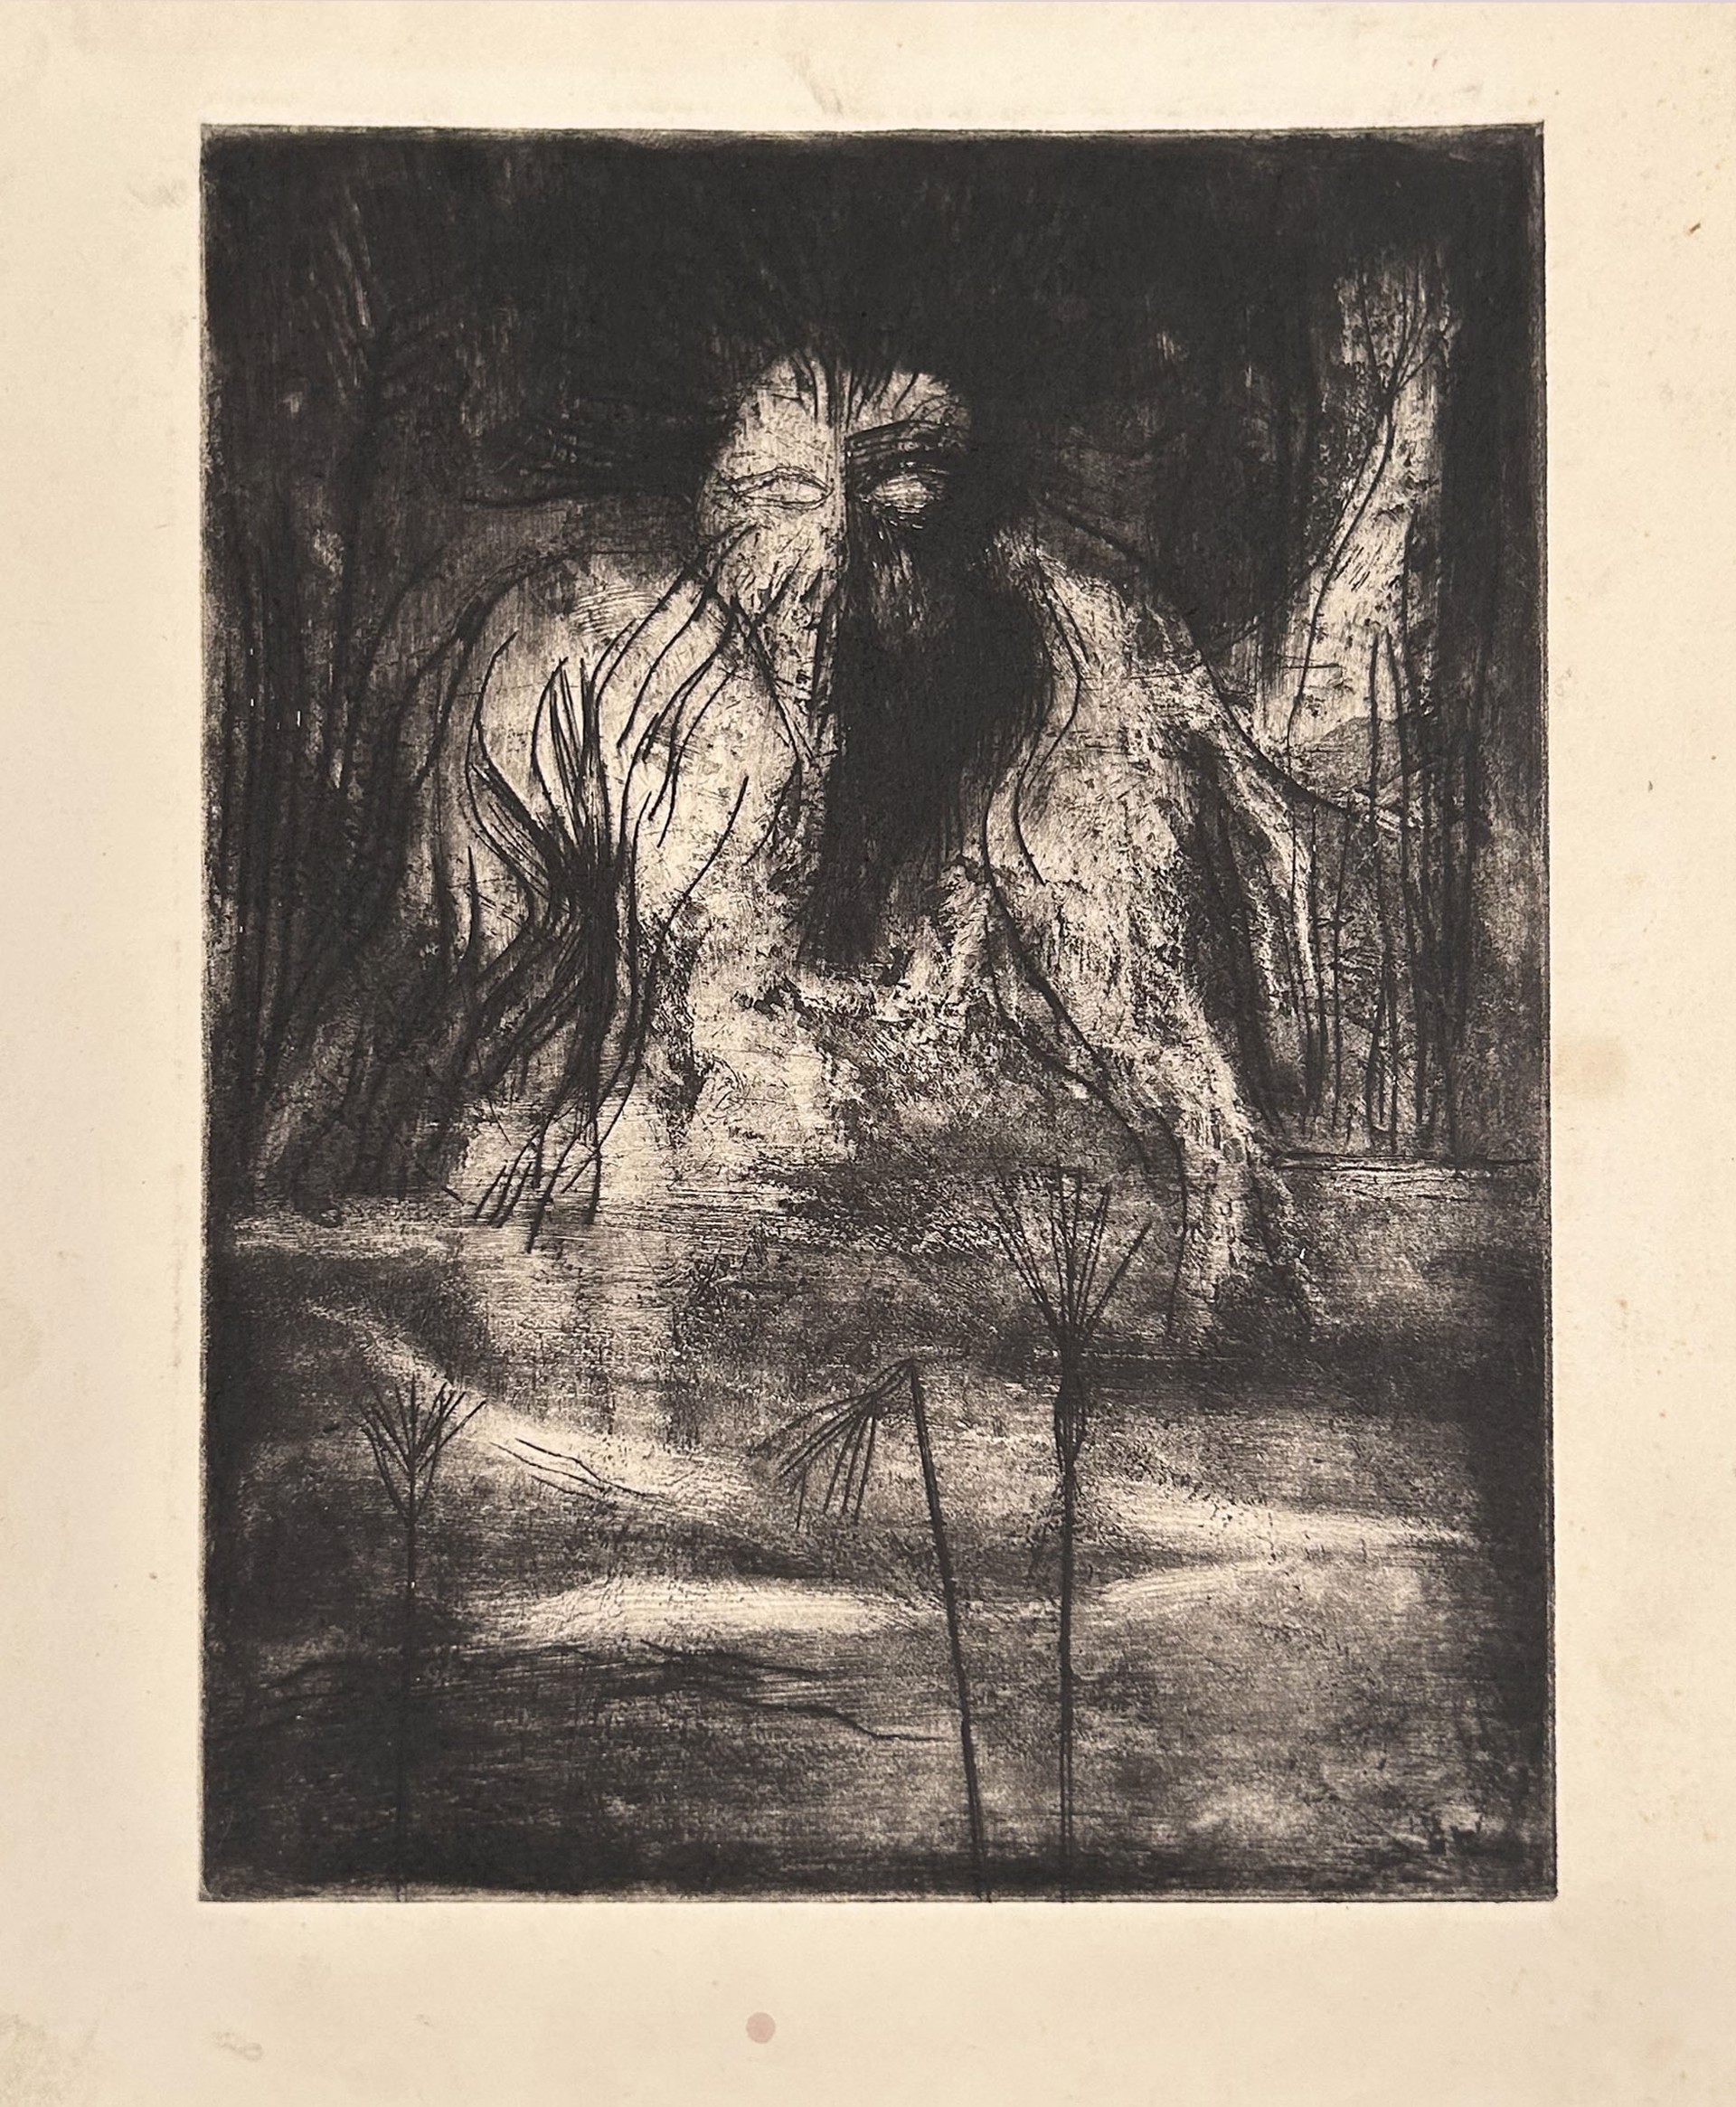 17b. Untitled (River Spirit- State II?) by Bill Reily - Prints